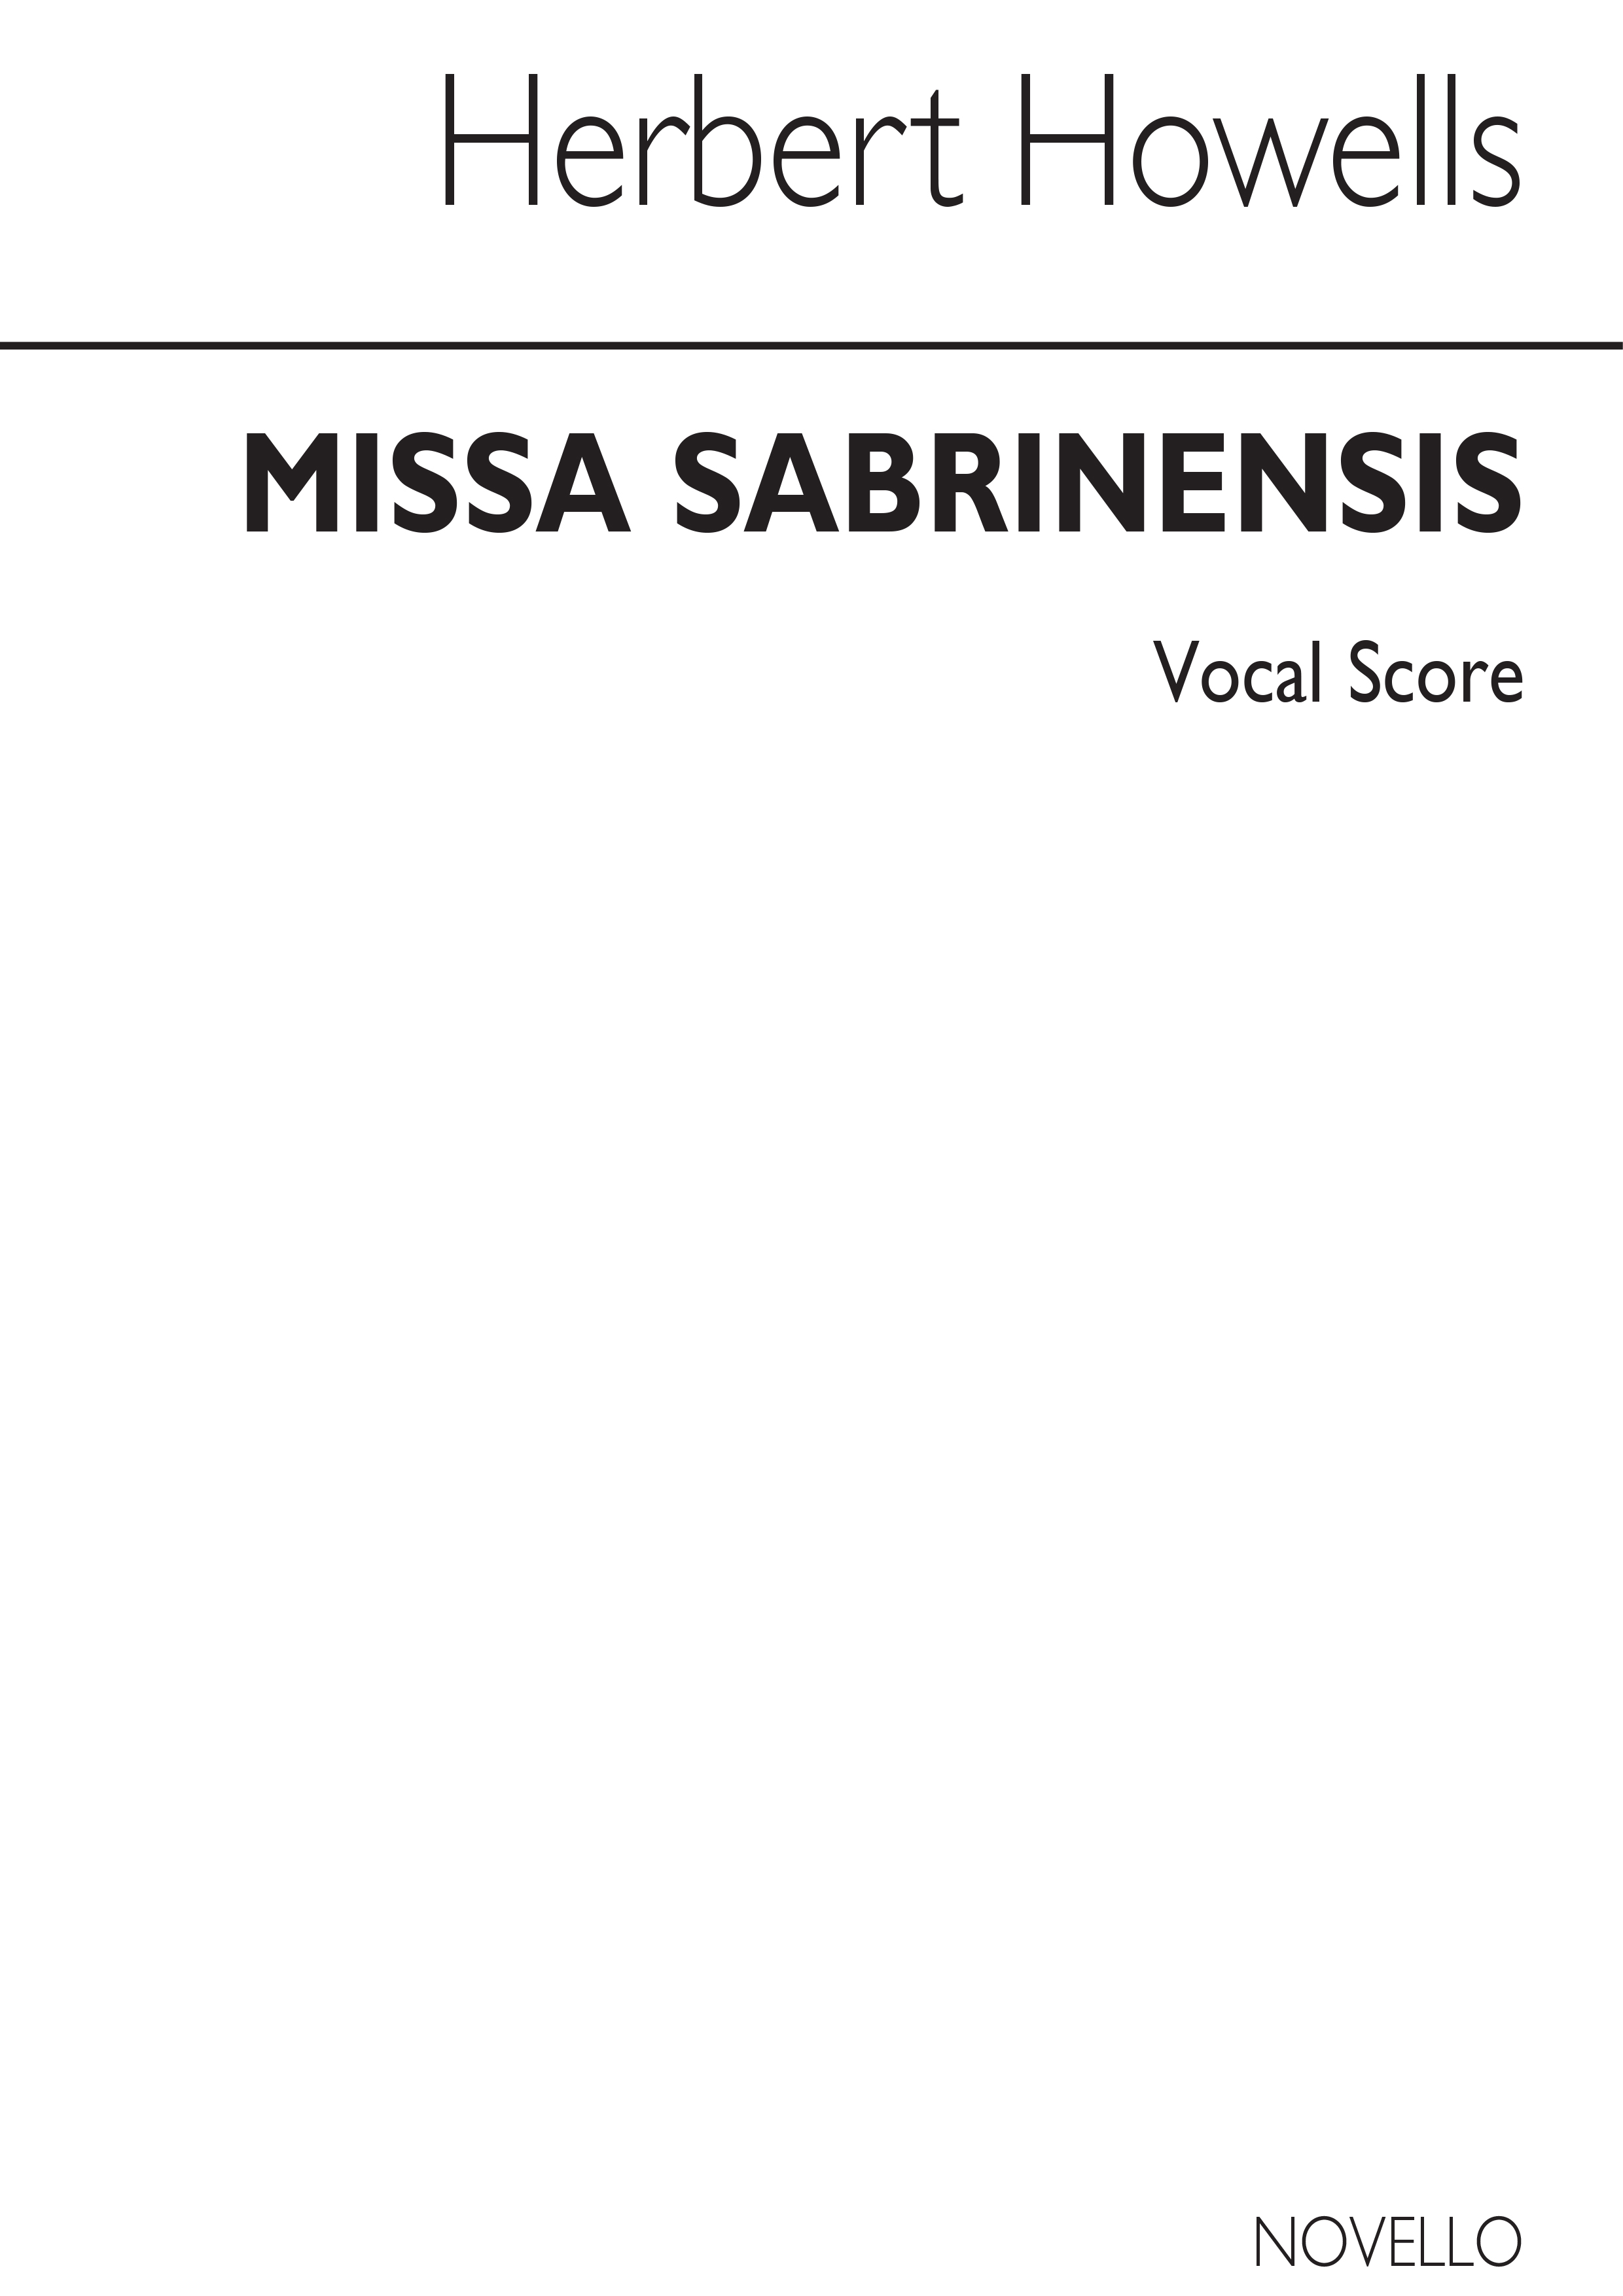 Herbert Howells: Missa Sabrinensis (Vocal Score)